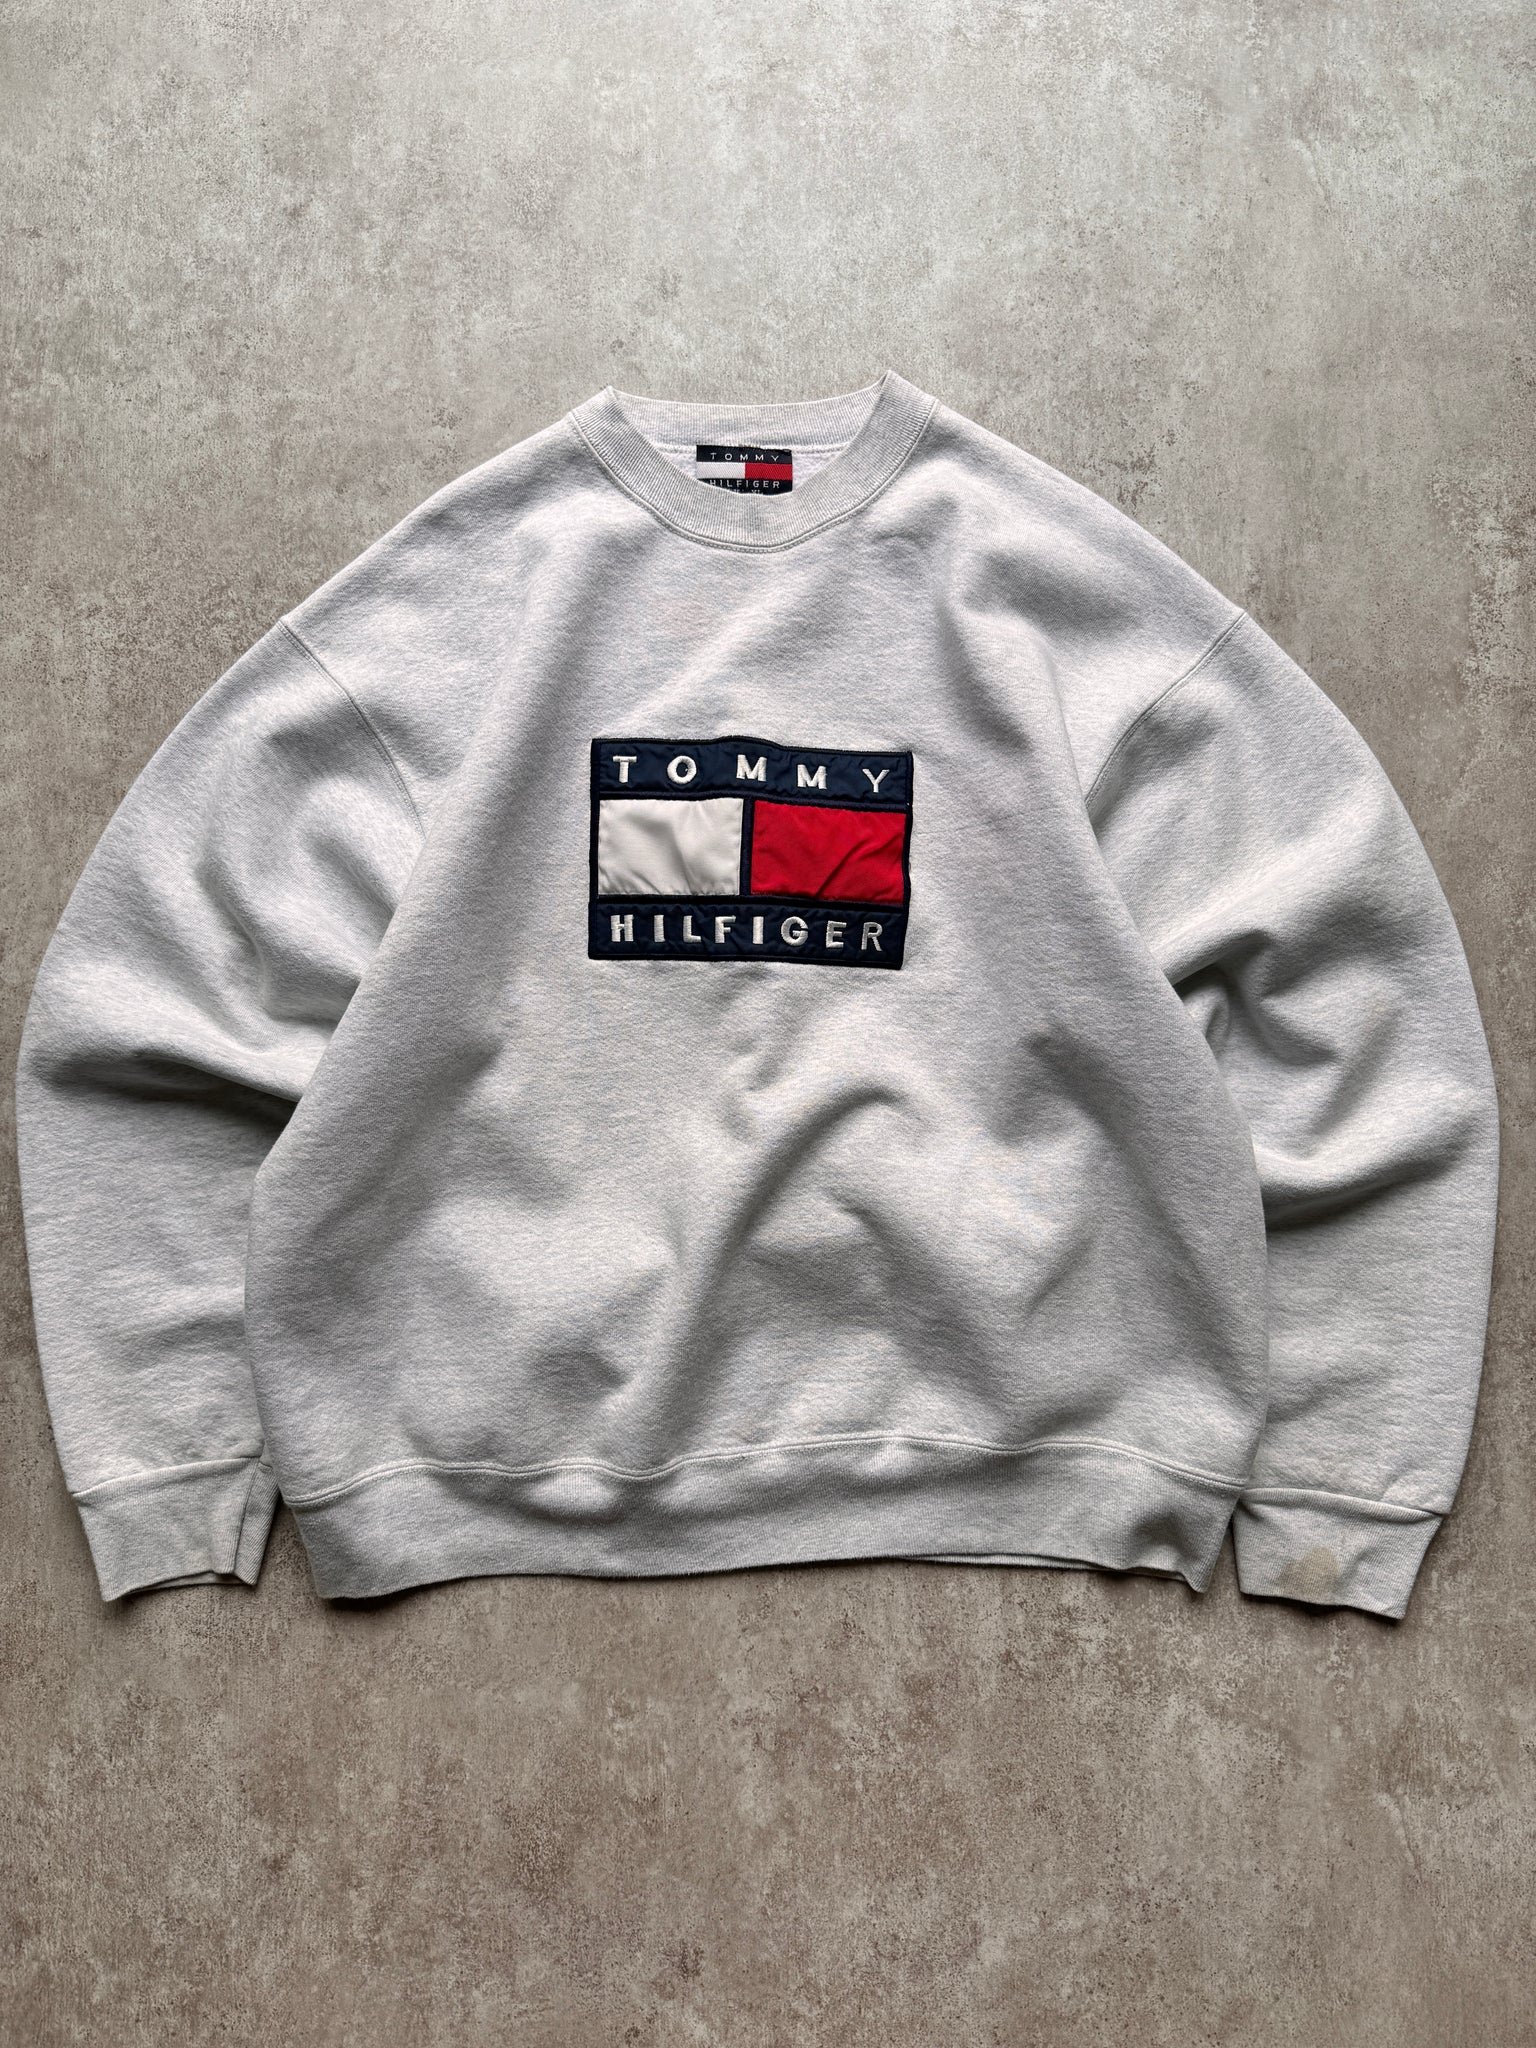 Vintage Tommy Hilfiger Sweatshirt (XL)